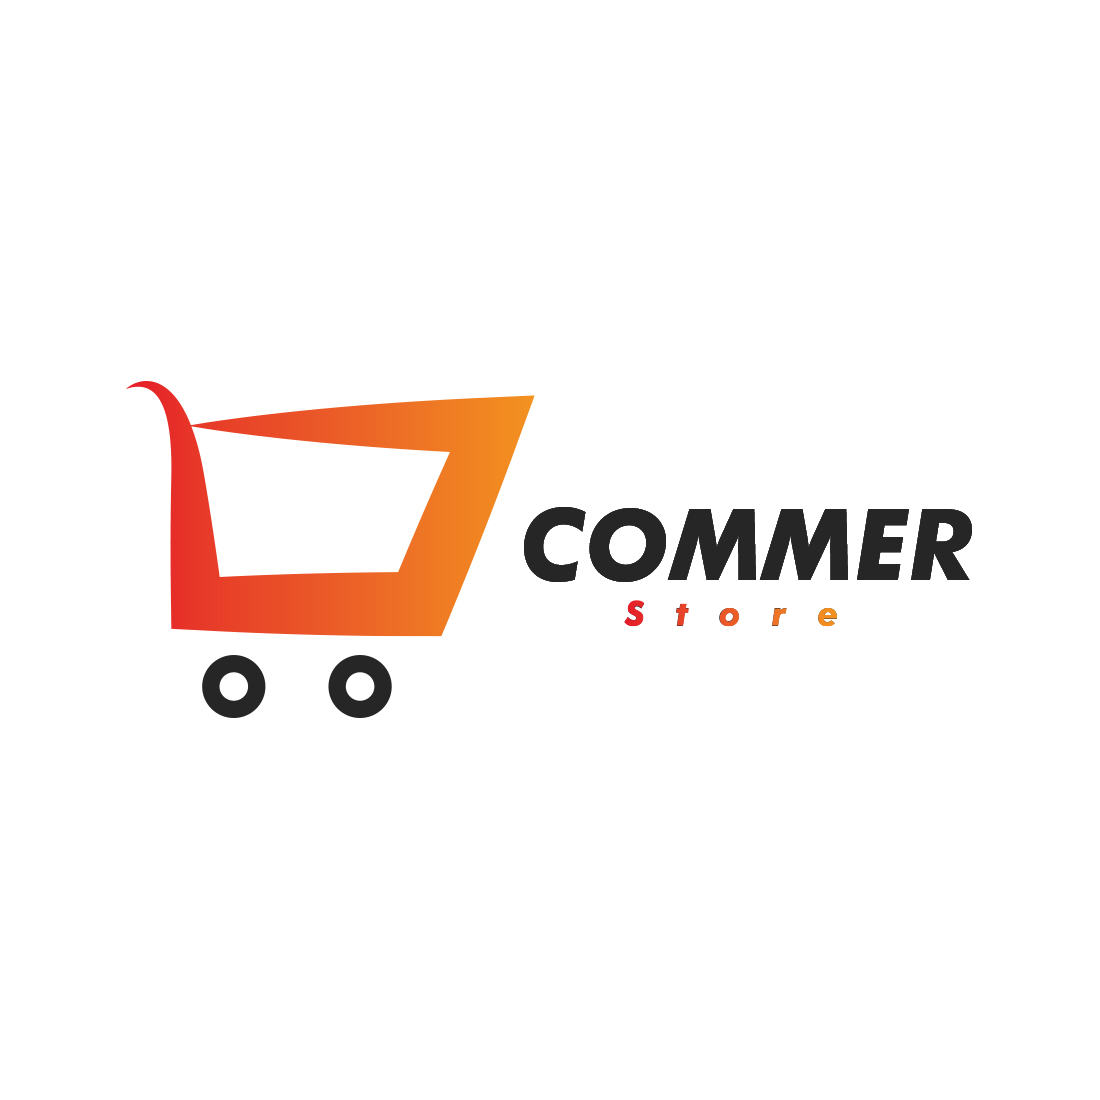 E-Commerce ( Stores ) logo design preview image.